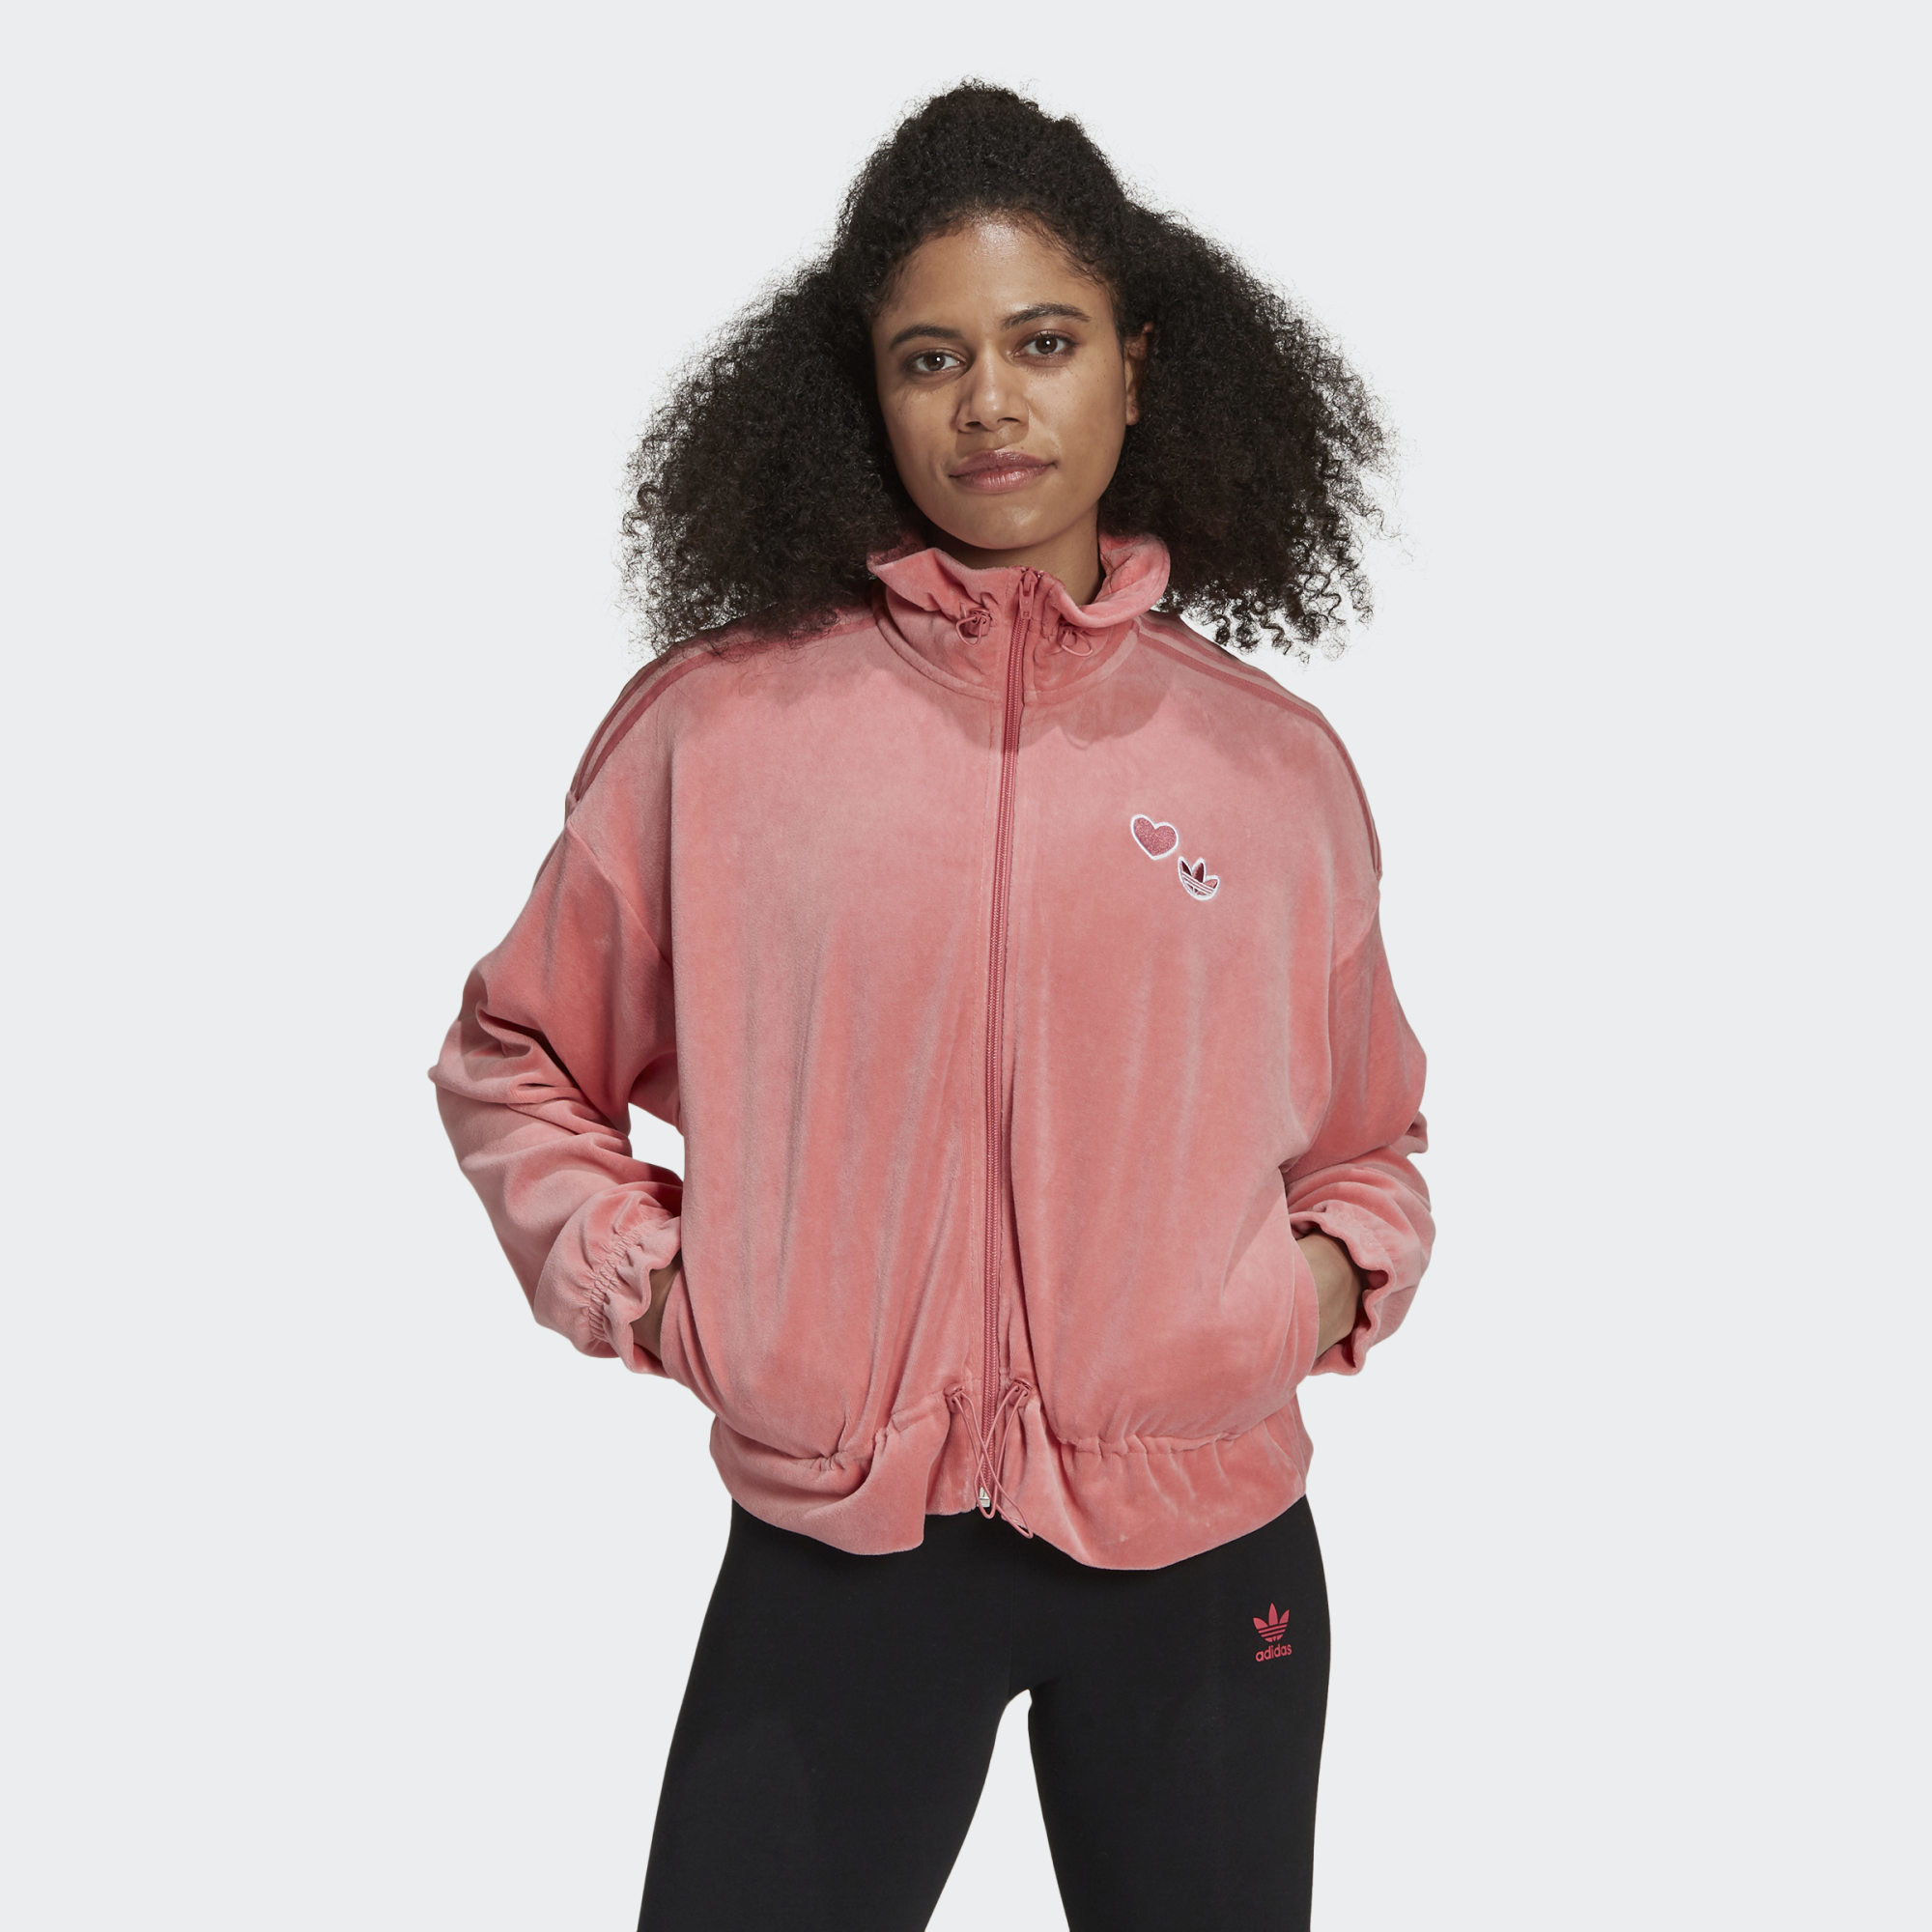 Model wears dusty pink blue velour Adidas zipper jacket with track pants